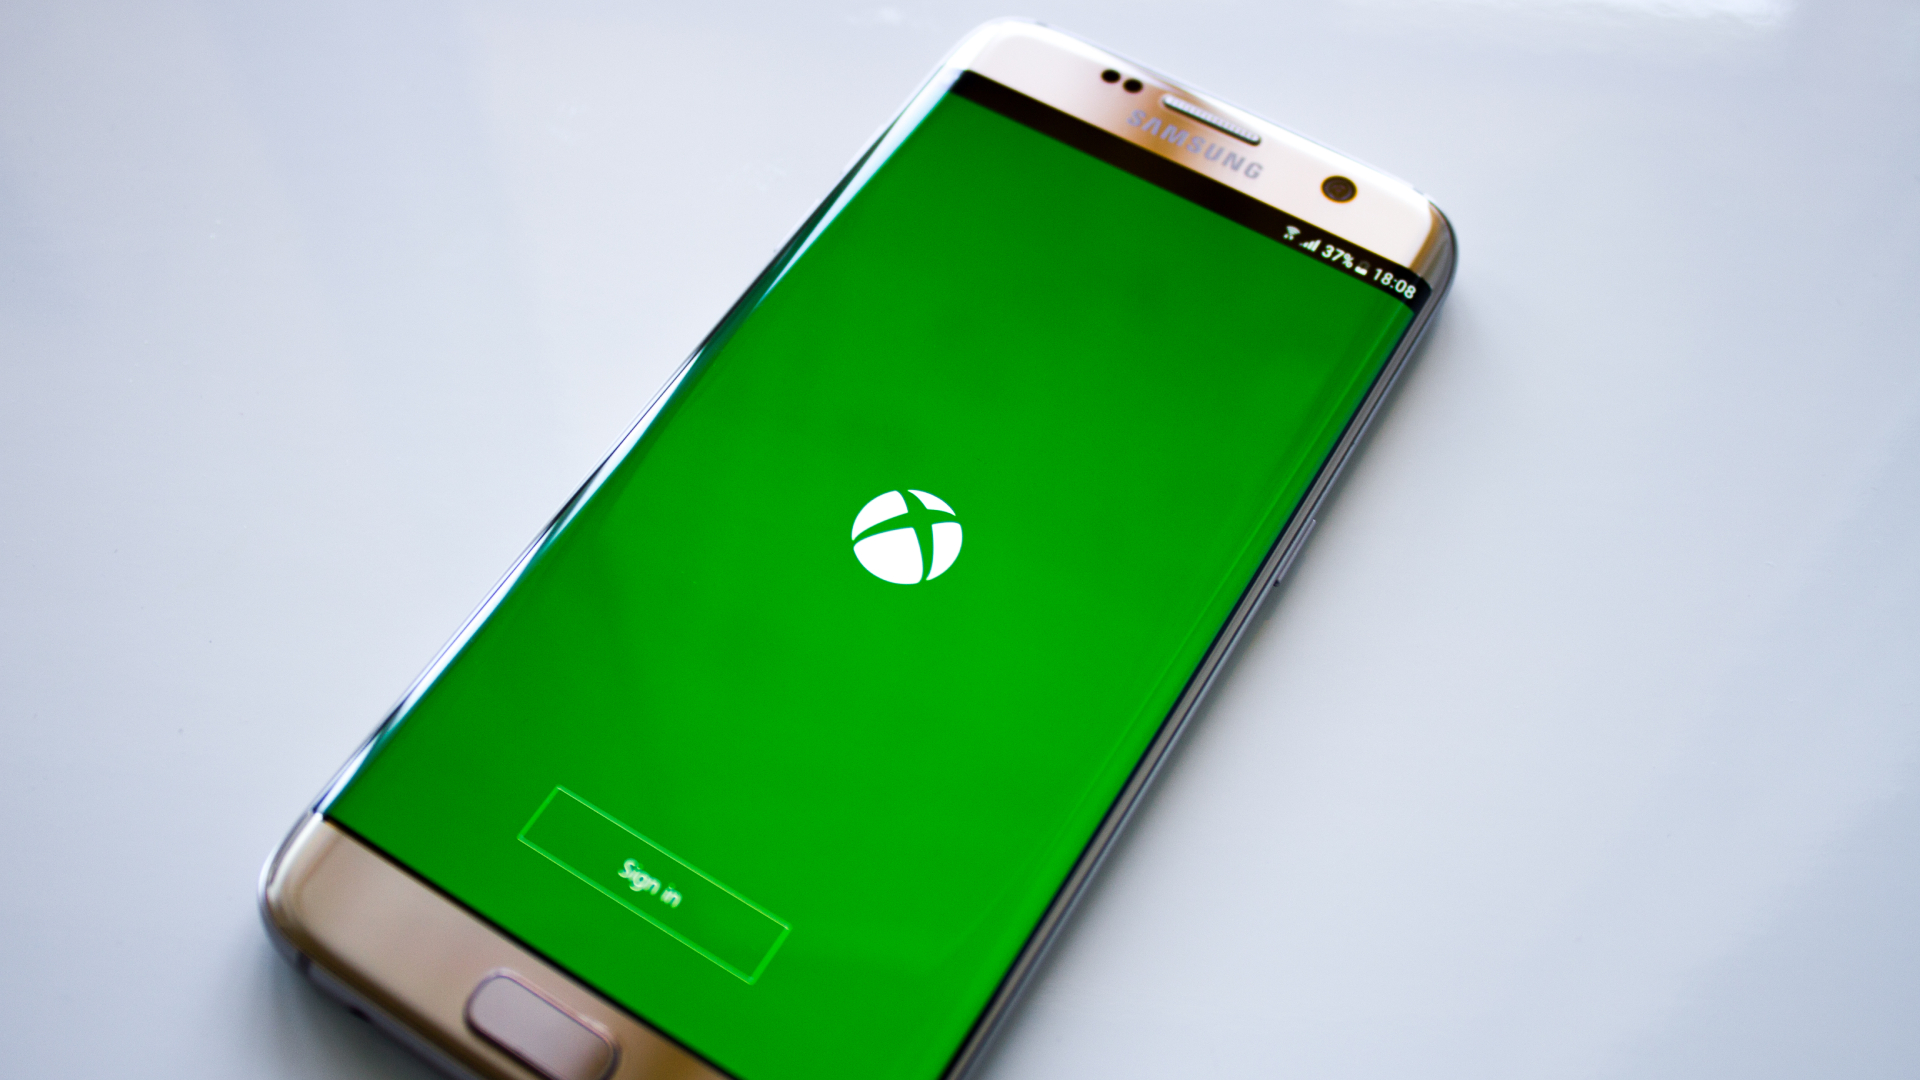 Xbox cloud gaming on Samsung smartphones